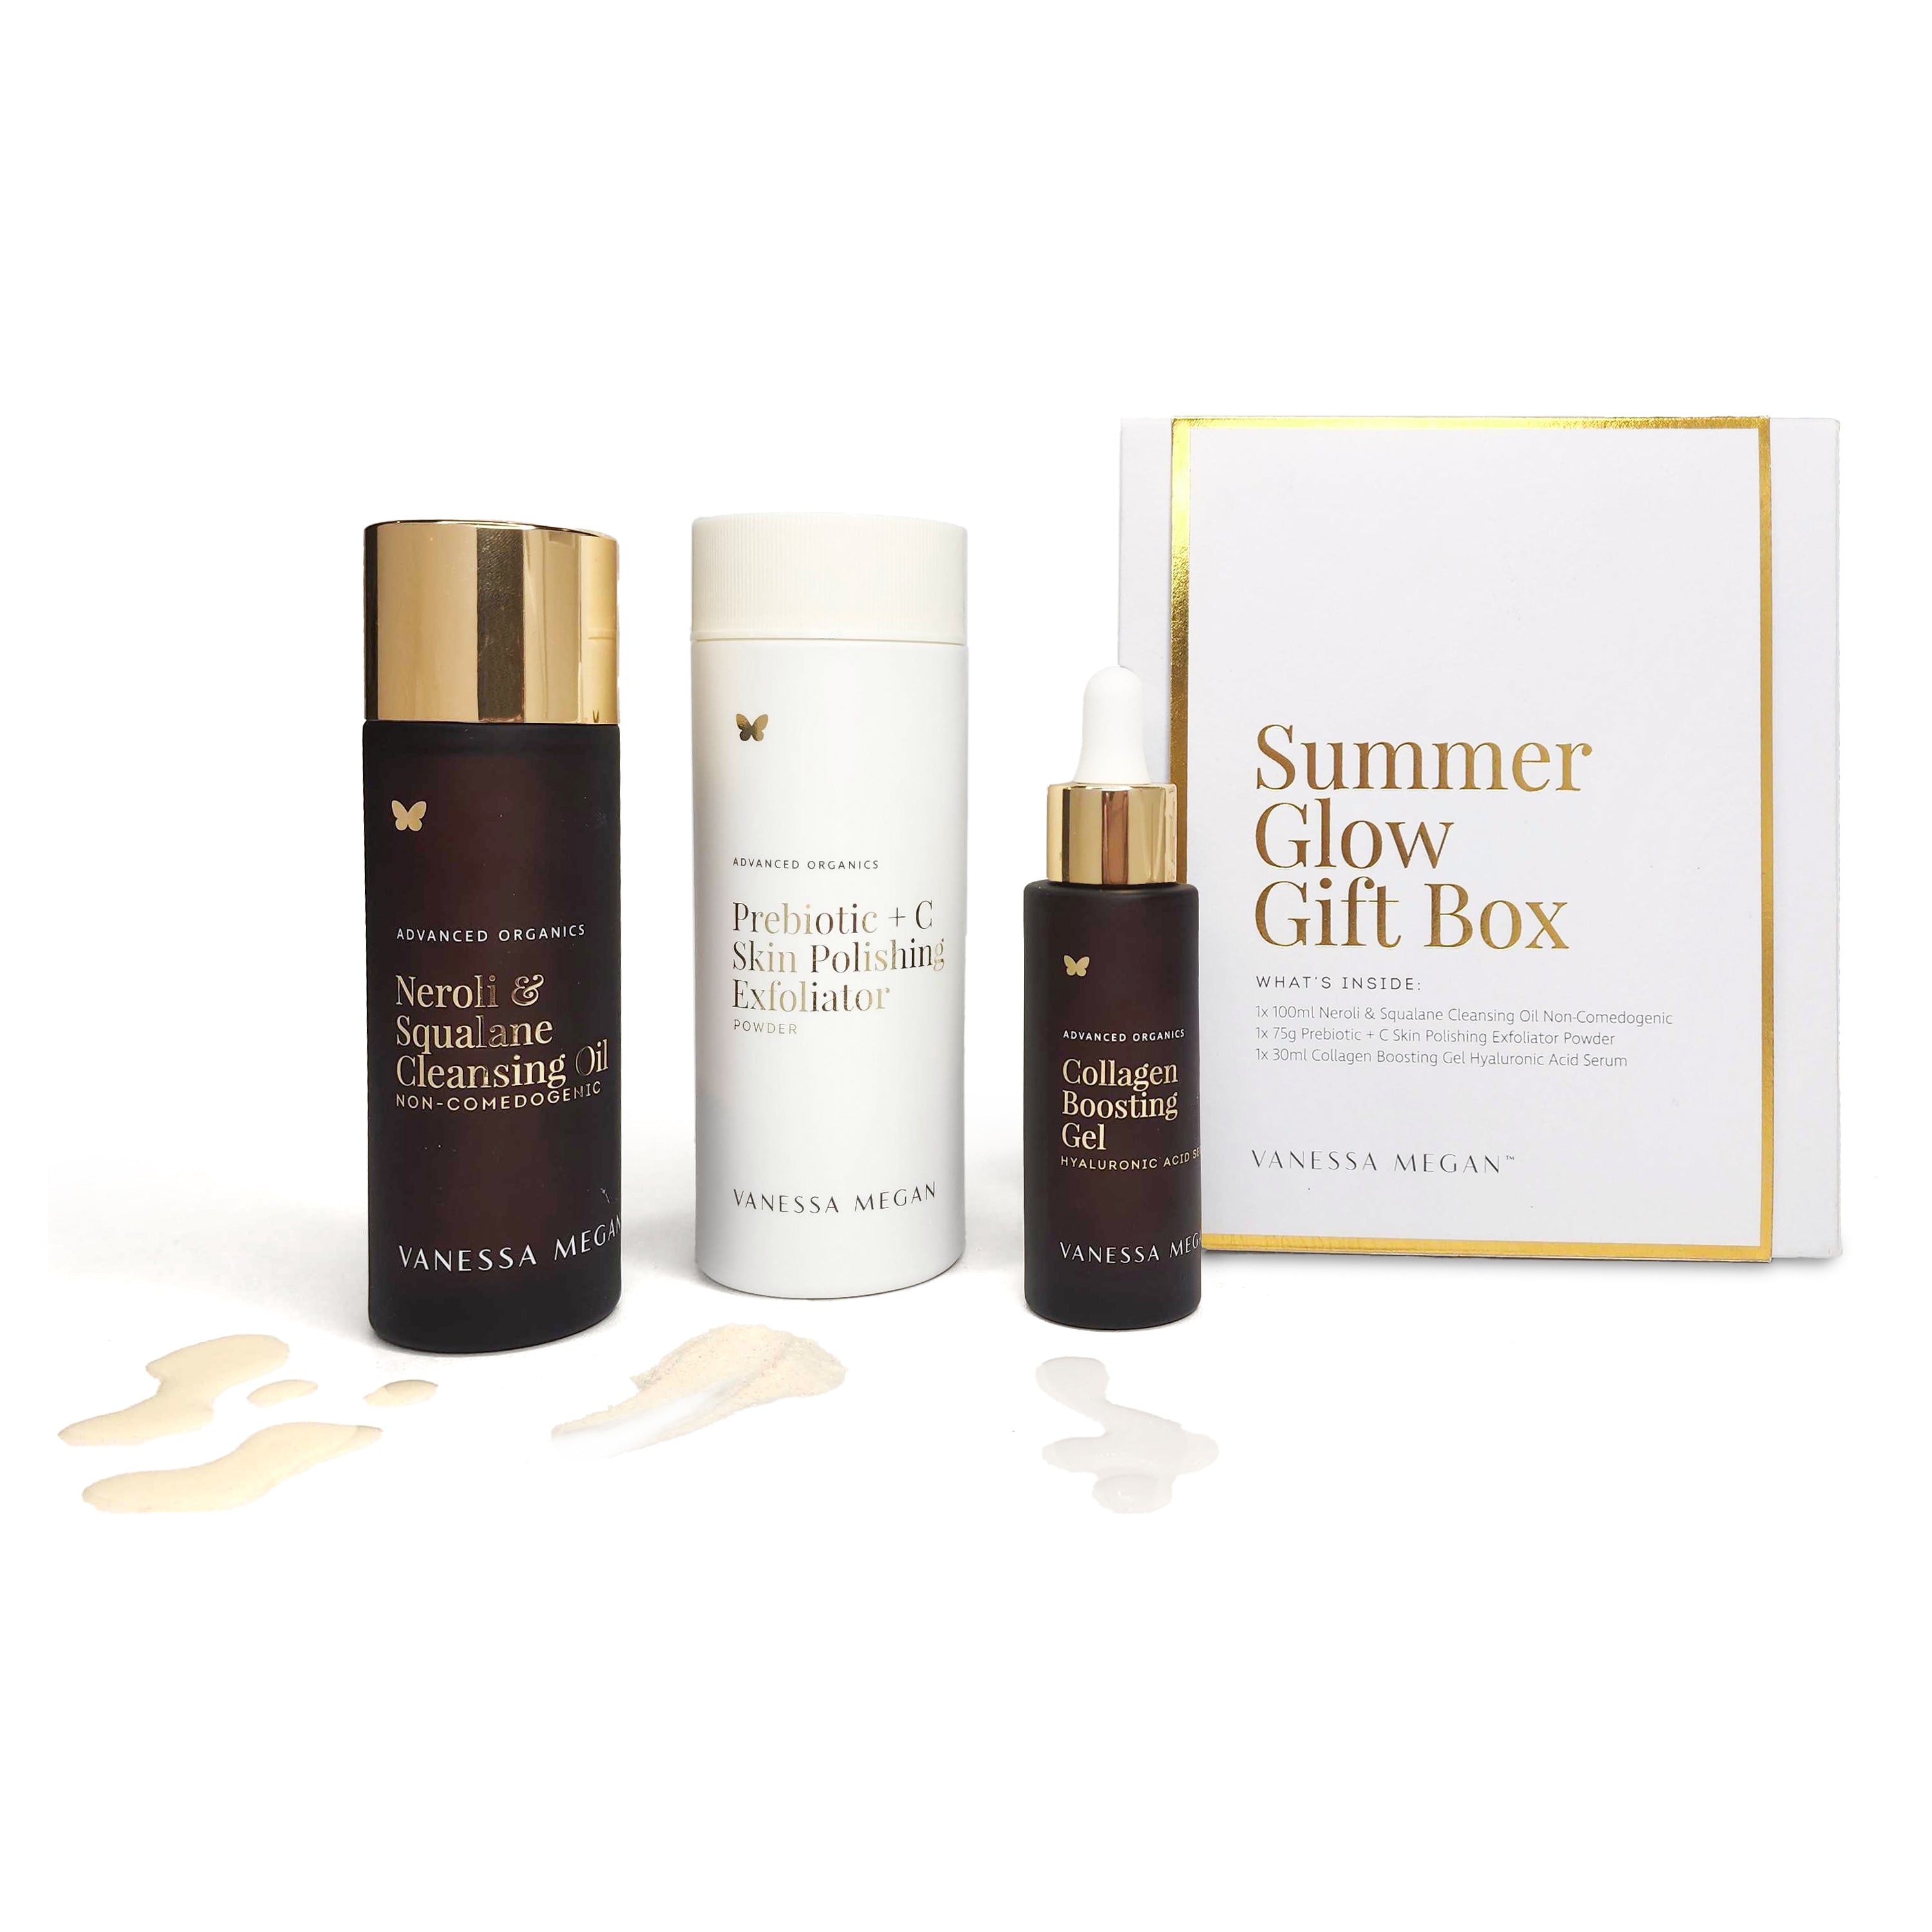 Summer Glow Gift Box